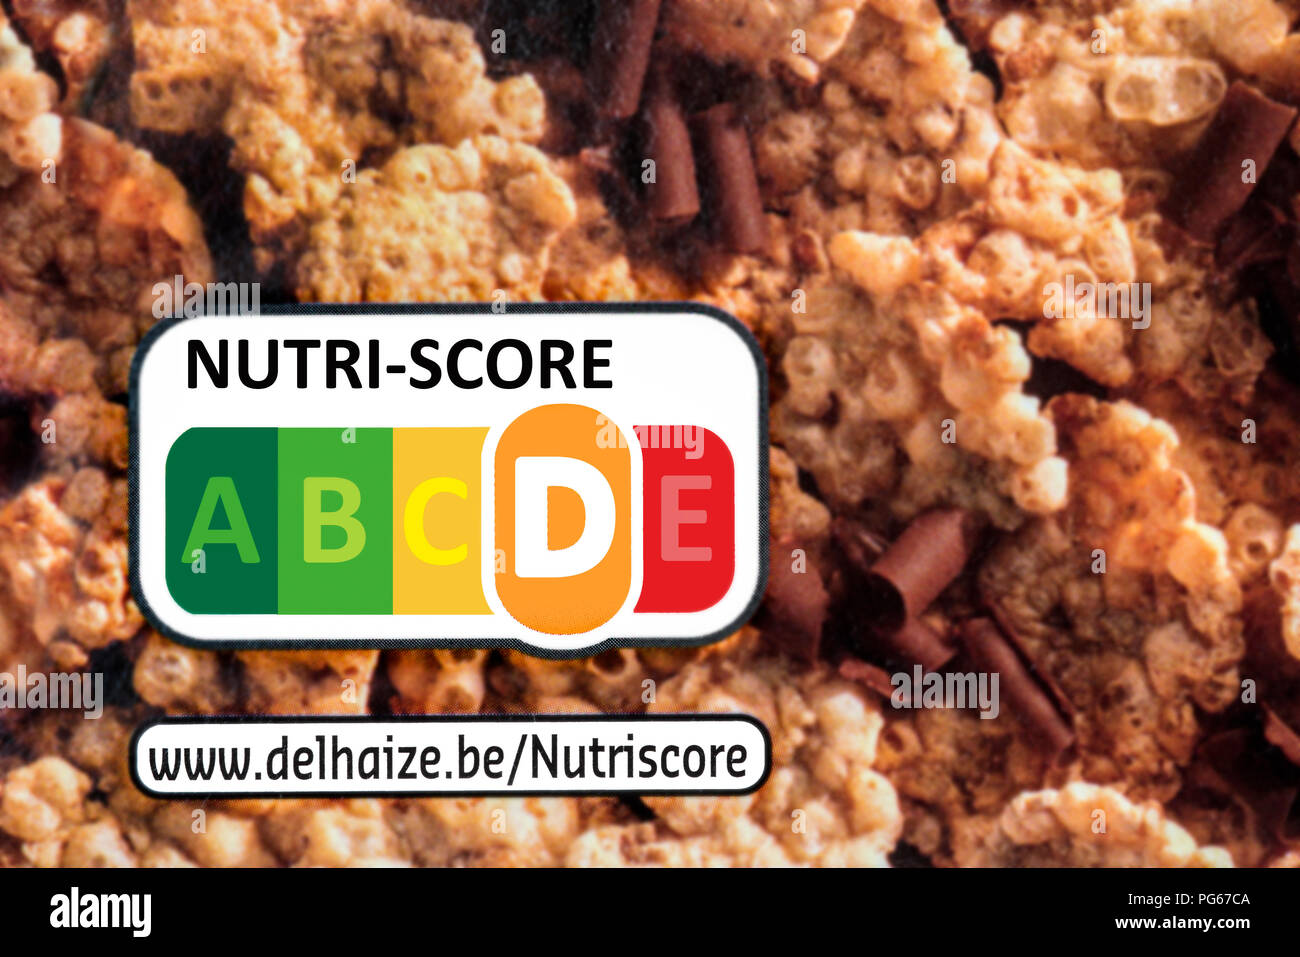 Nutritional label Nutri score on box of Delhaize Super Crunchy Flakes Stock Photo